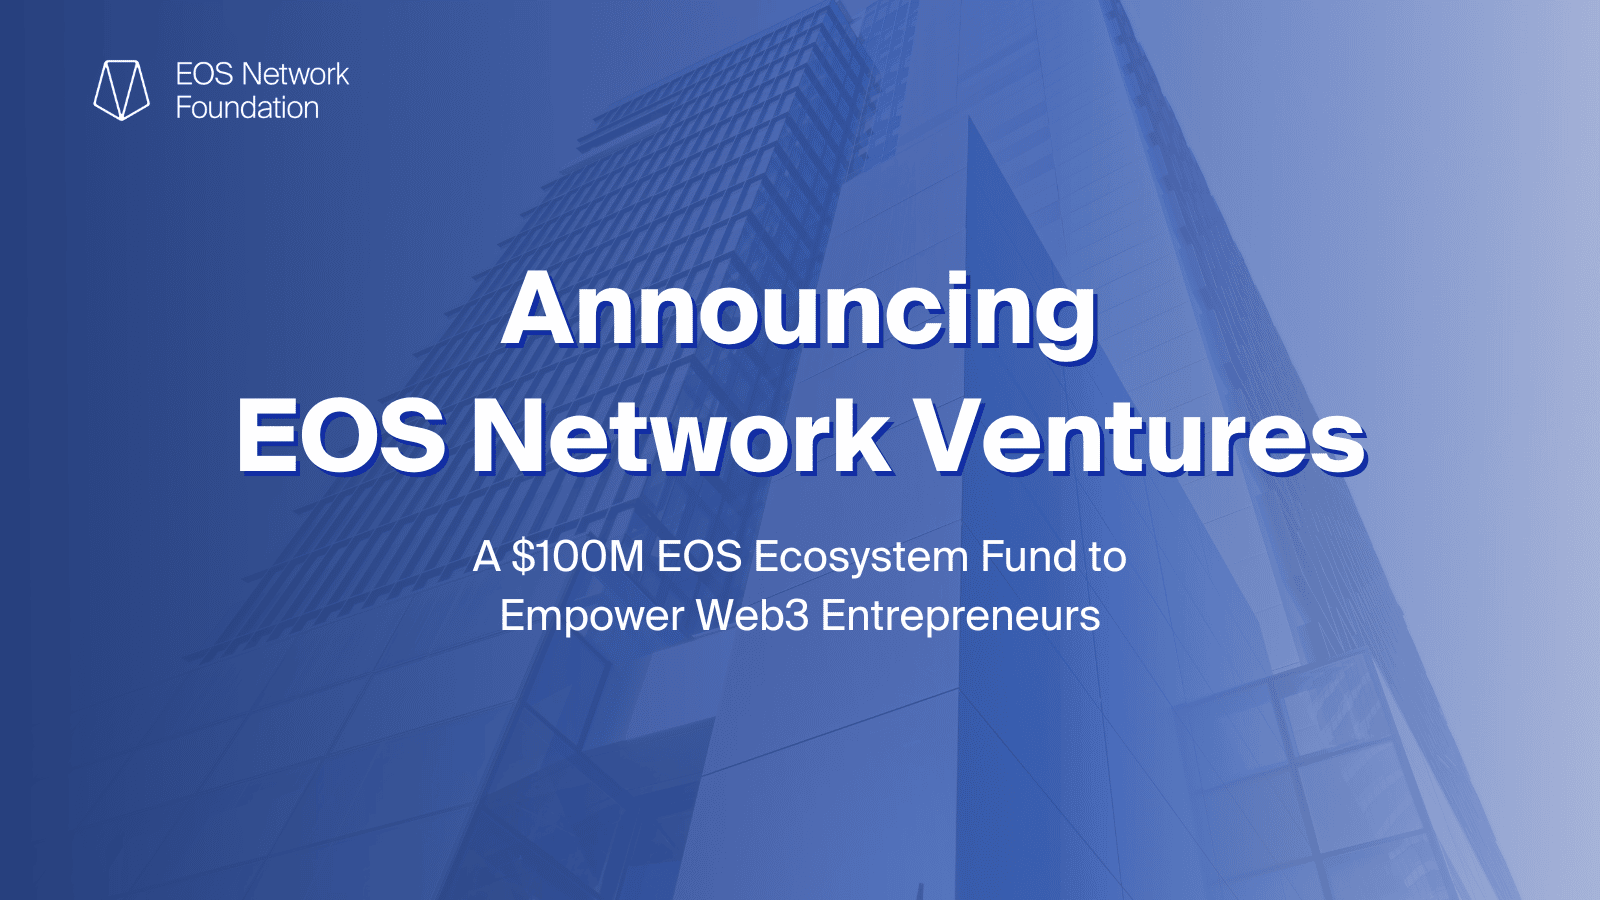 EOS-Network-Ventures-Announcement-Graphic.png